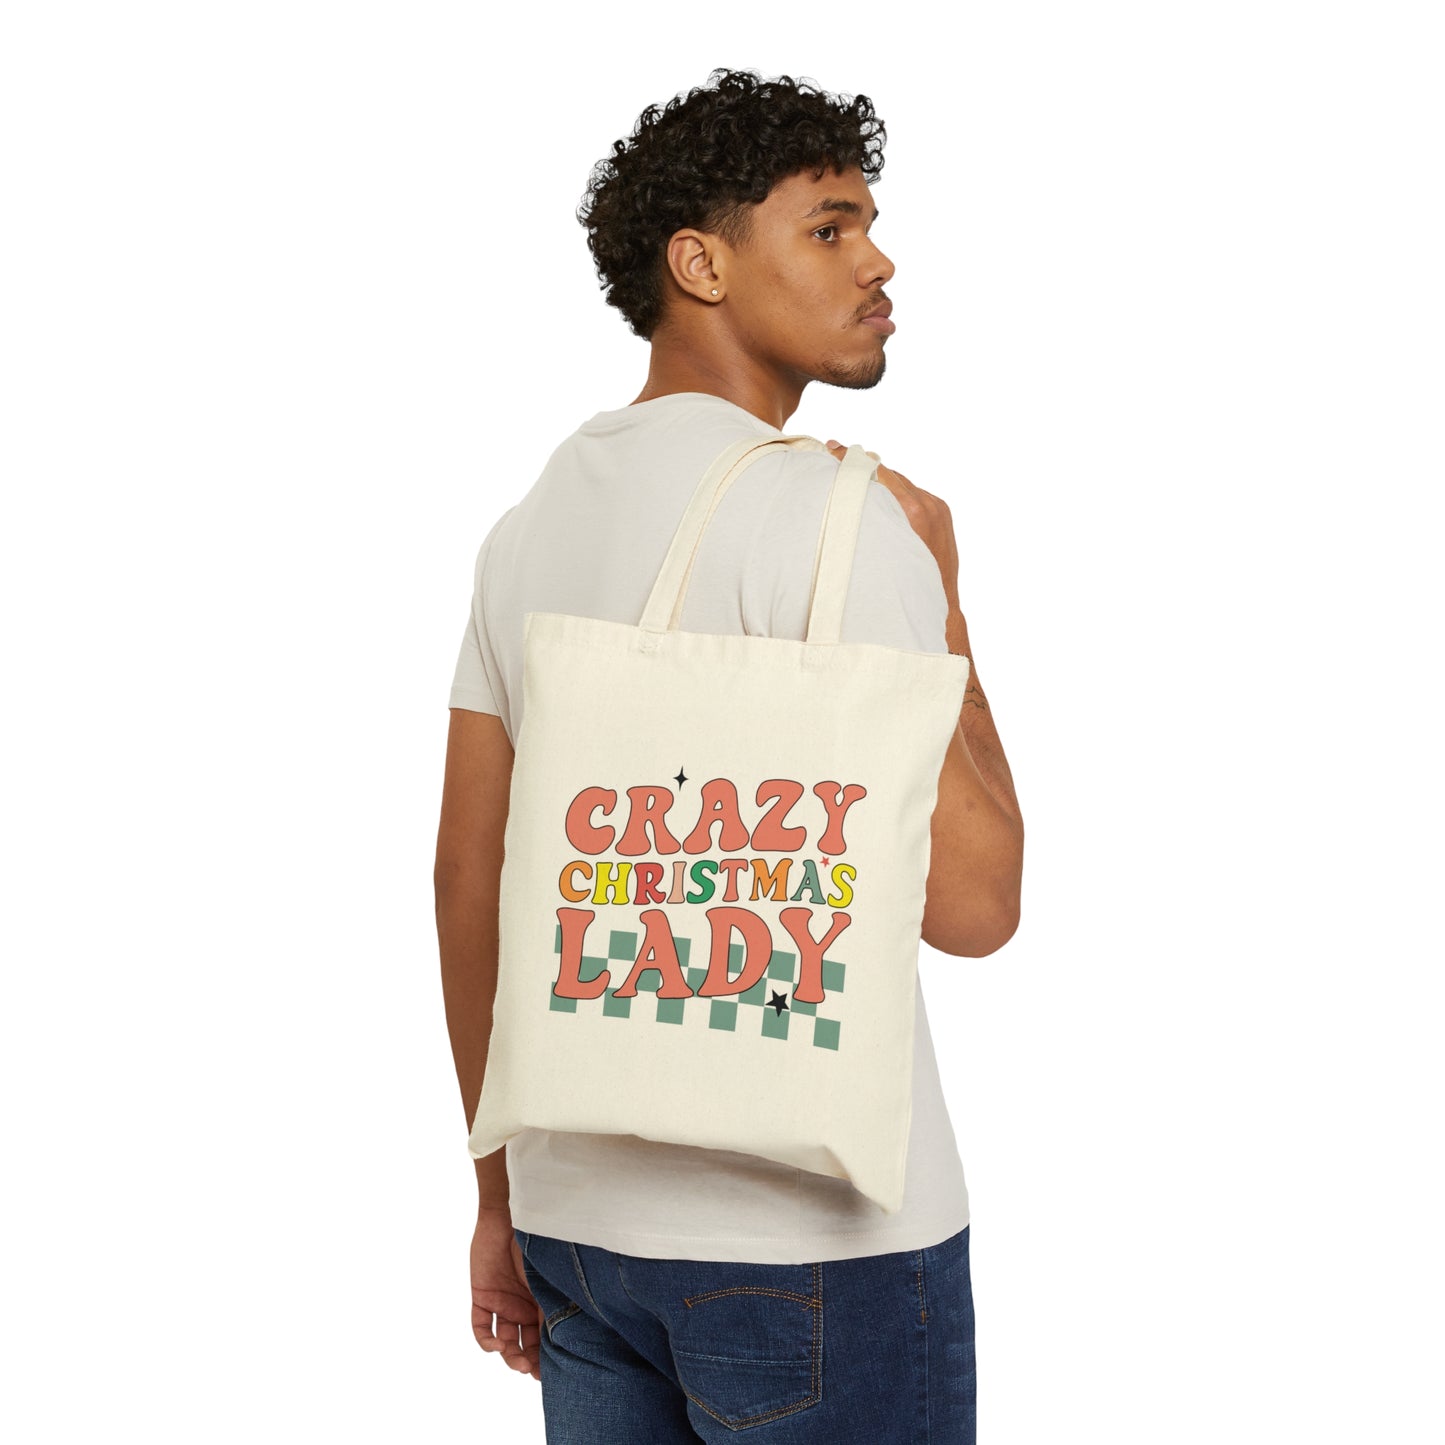 Crazy Christmas Lady - Christmas Tote Bag - Cotton Canvas Tote Bag